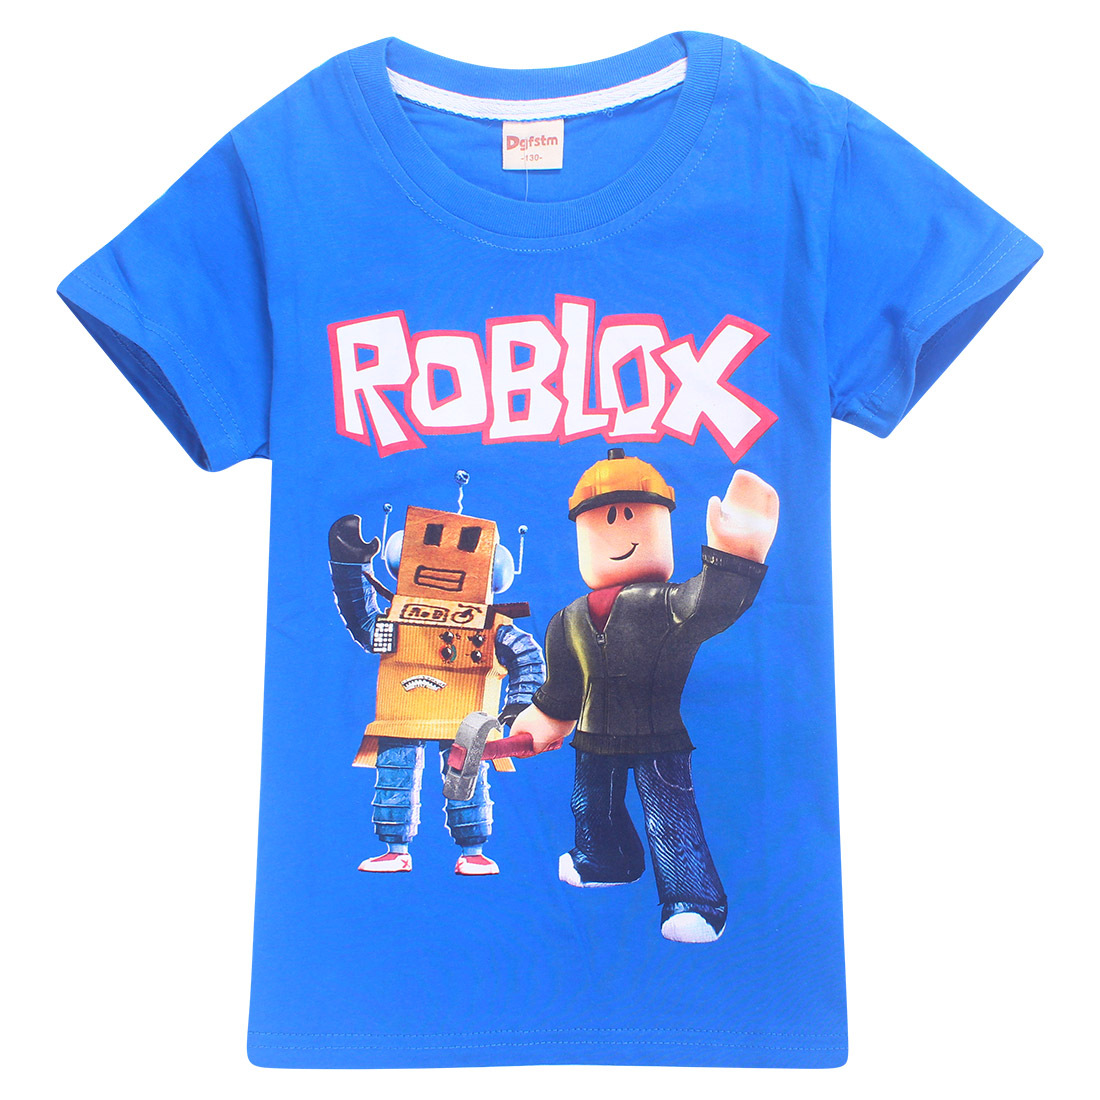 Roblox T Shirts For Kids Eyegemix Com - 1999 roblox id